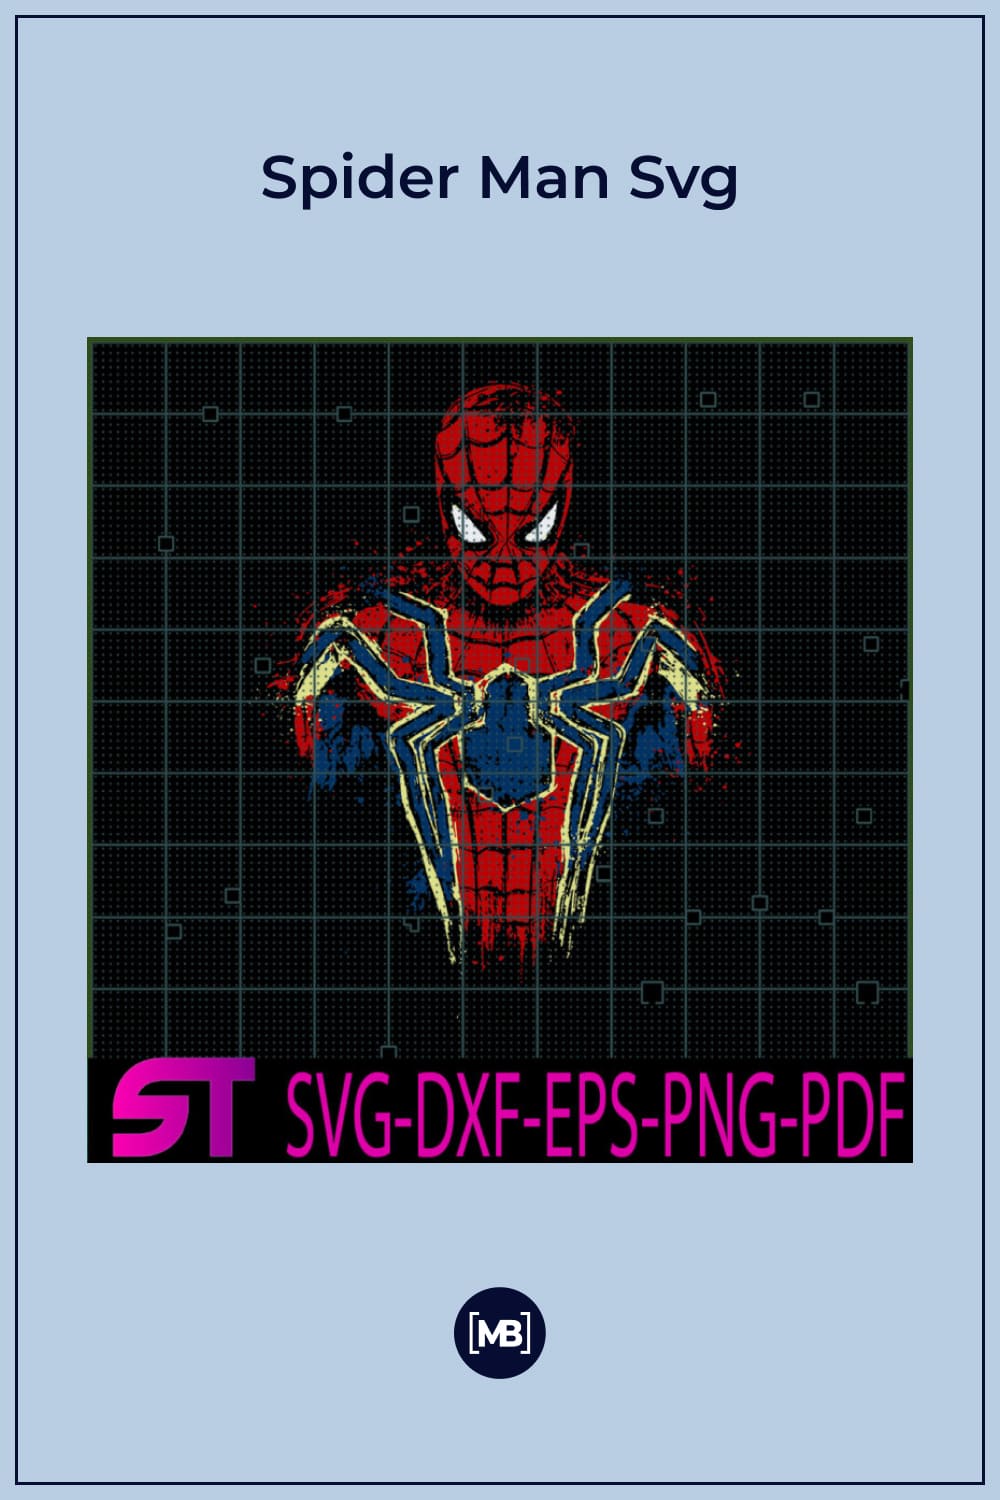 Spider-Man Face Svg.